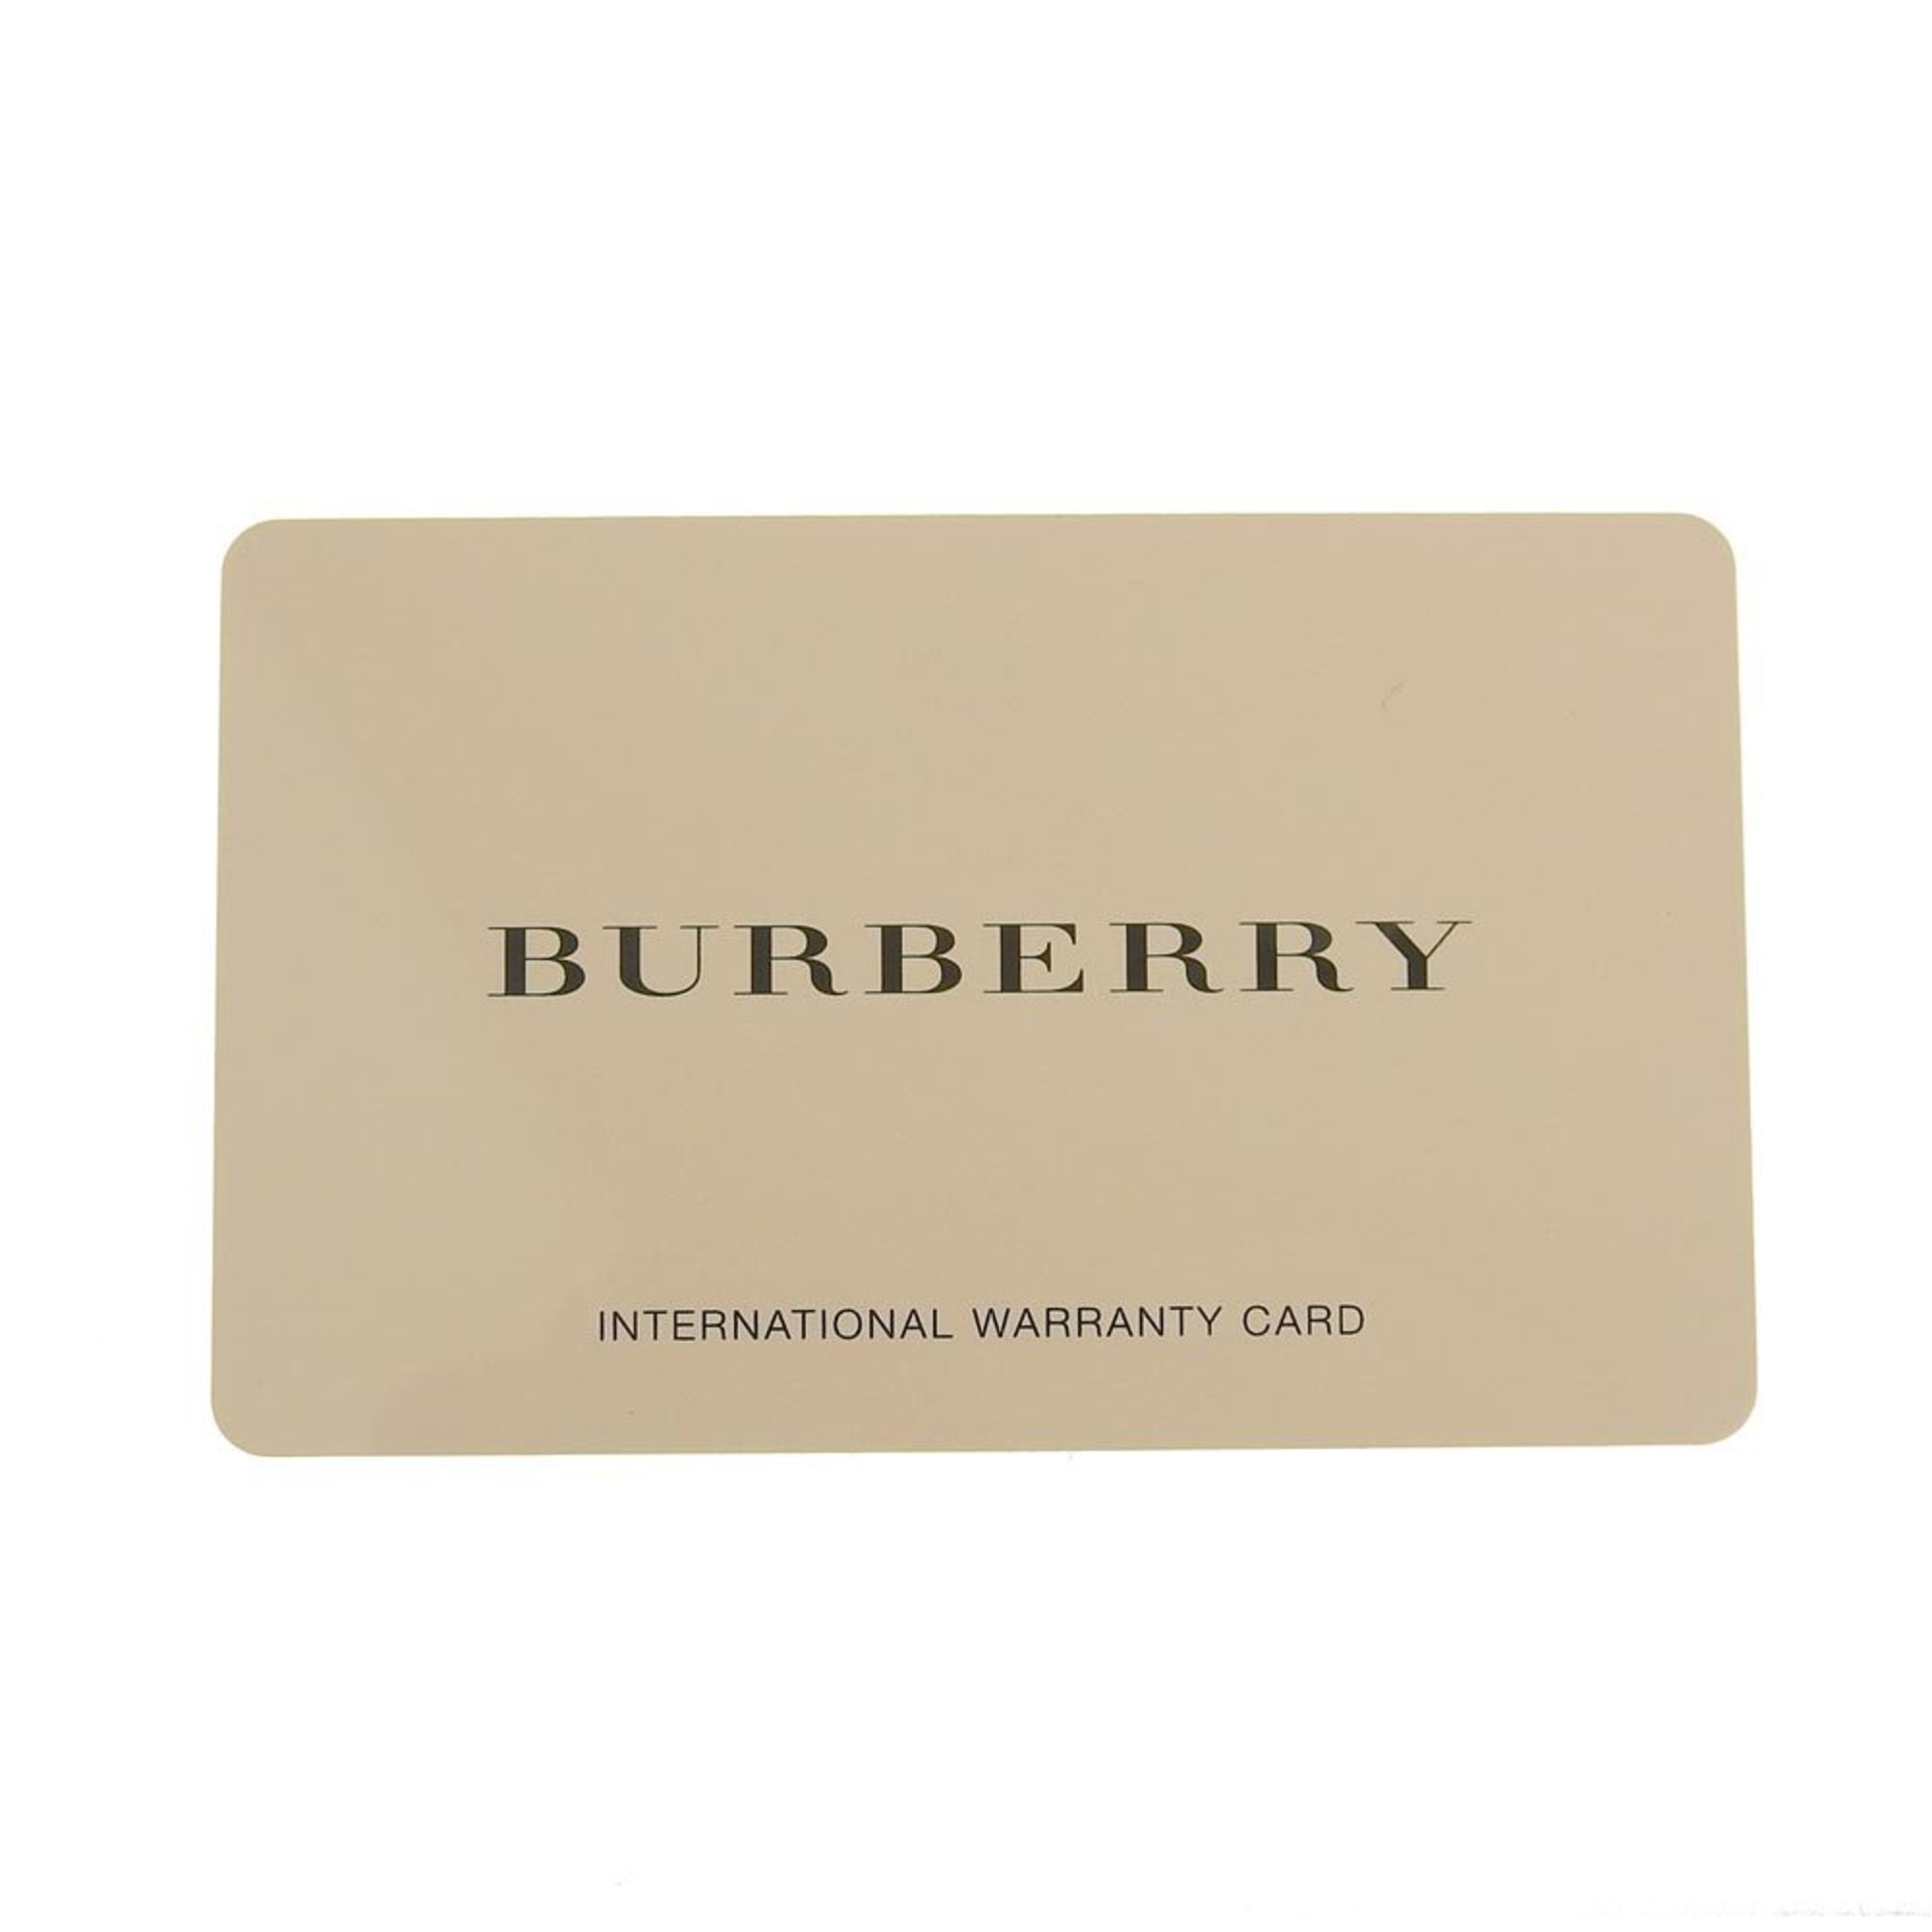 BURBERRY Burberry Heritage Bangle Watch BU4701 Stainless Steel Silver Quartz Analog Display Ladies Brown Dial